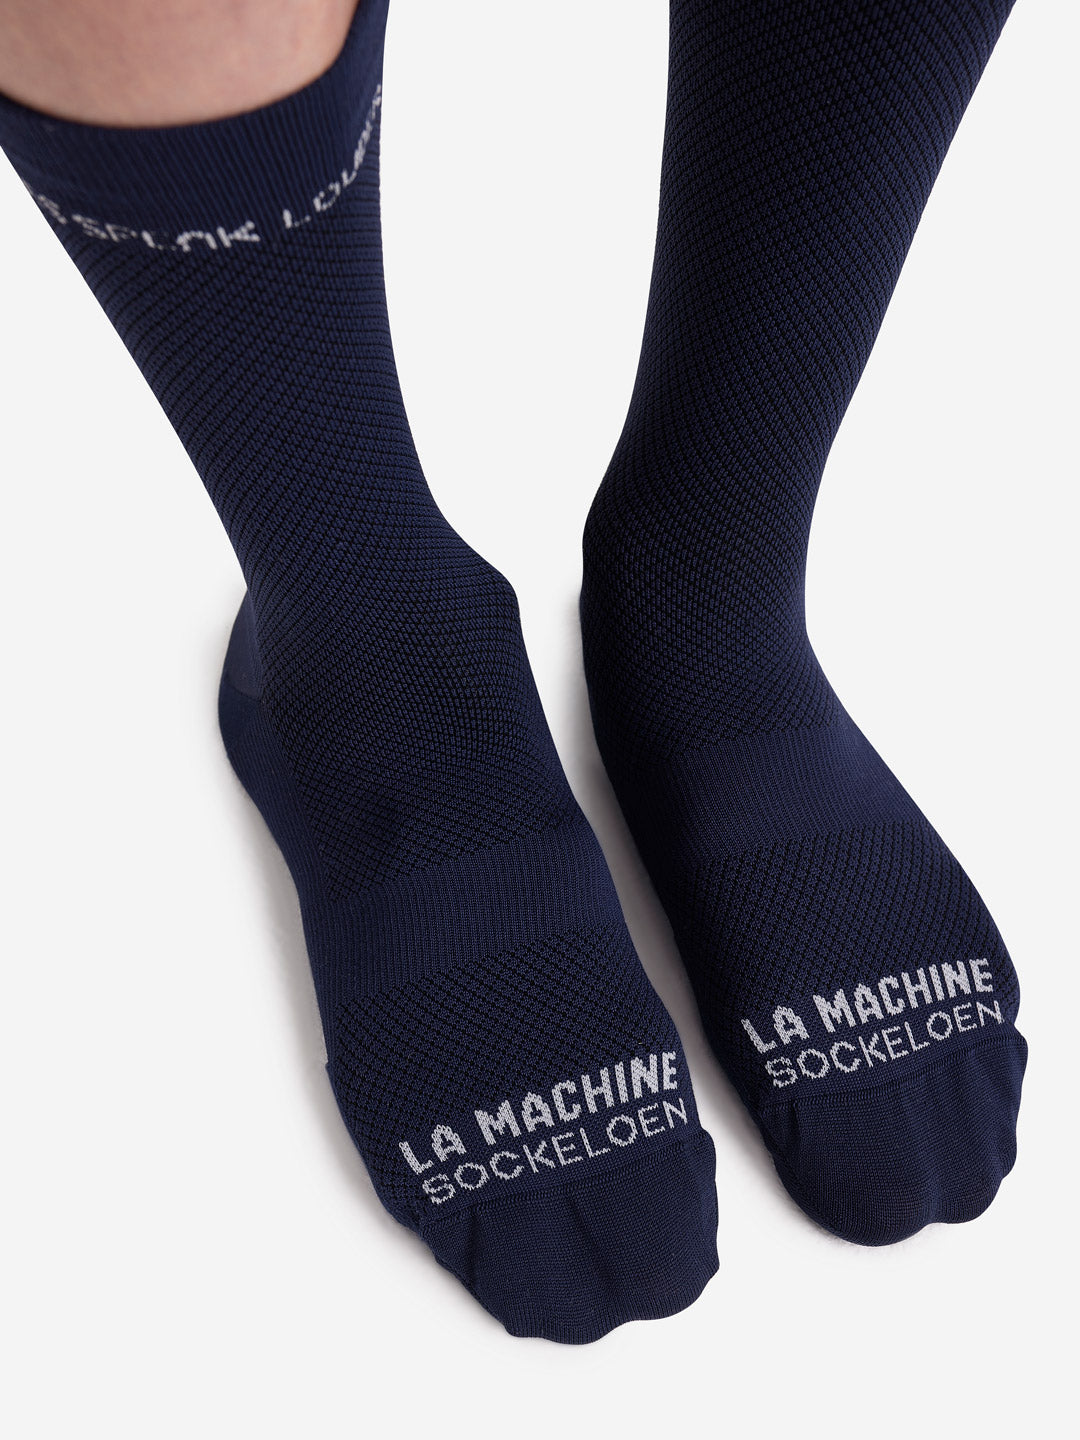 Louder than words - Cycling Socks - Dark Blue - La Machine Cycle Club